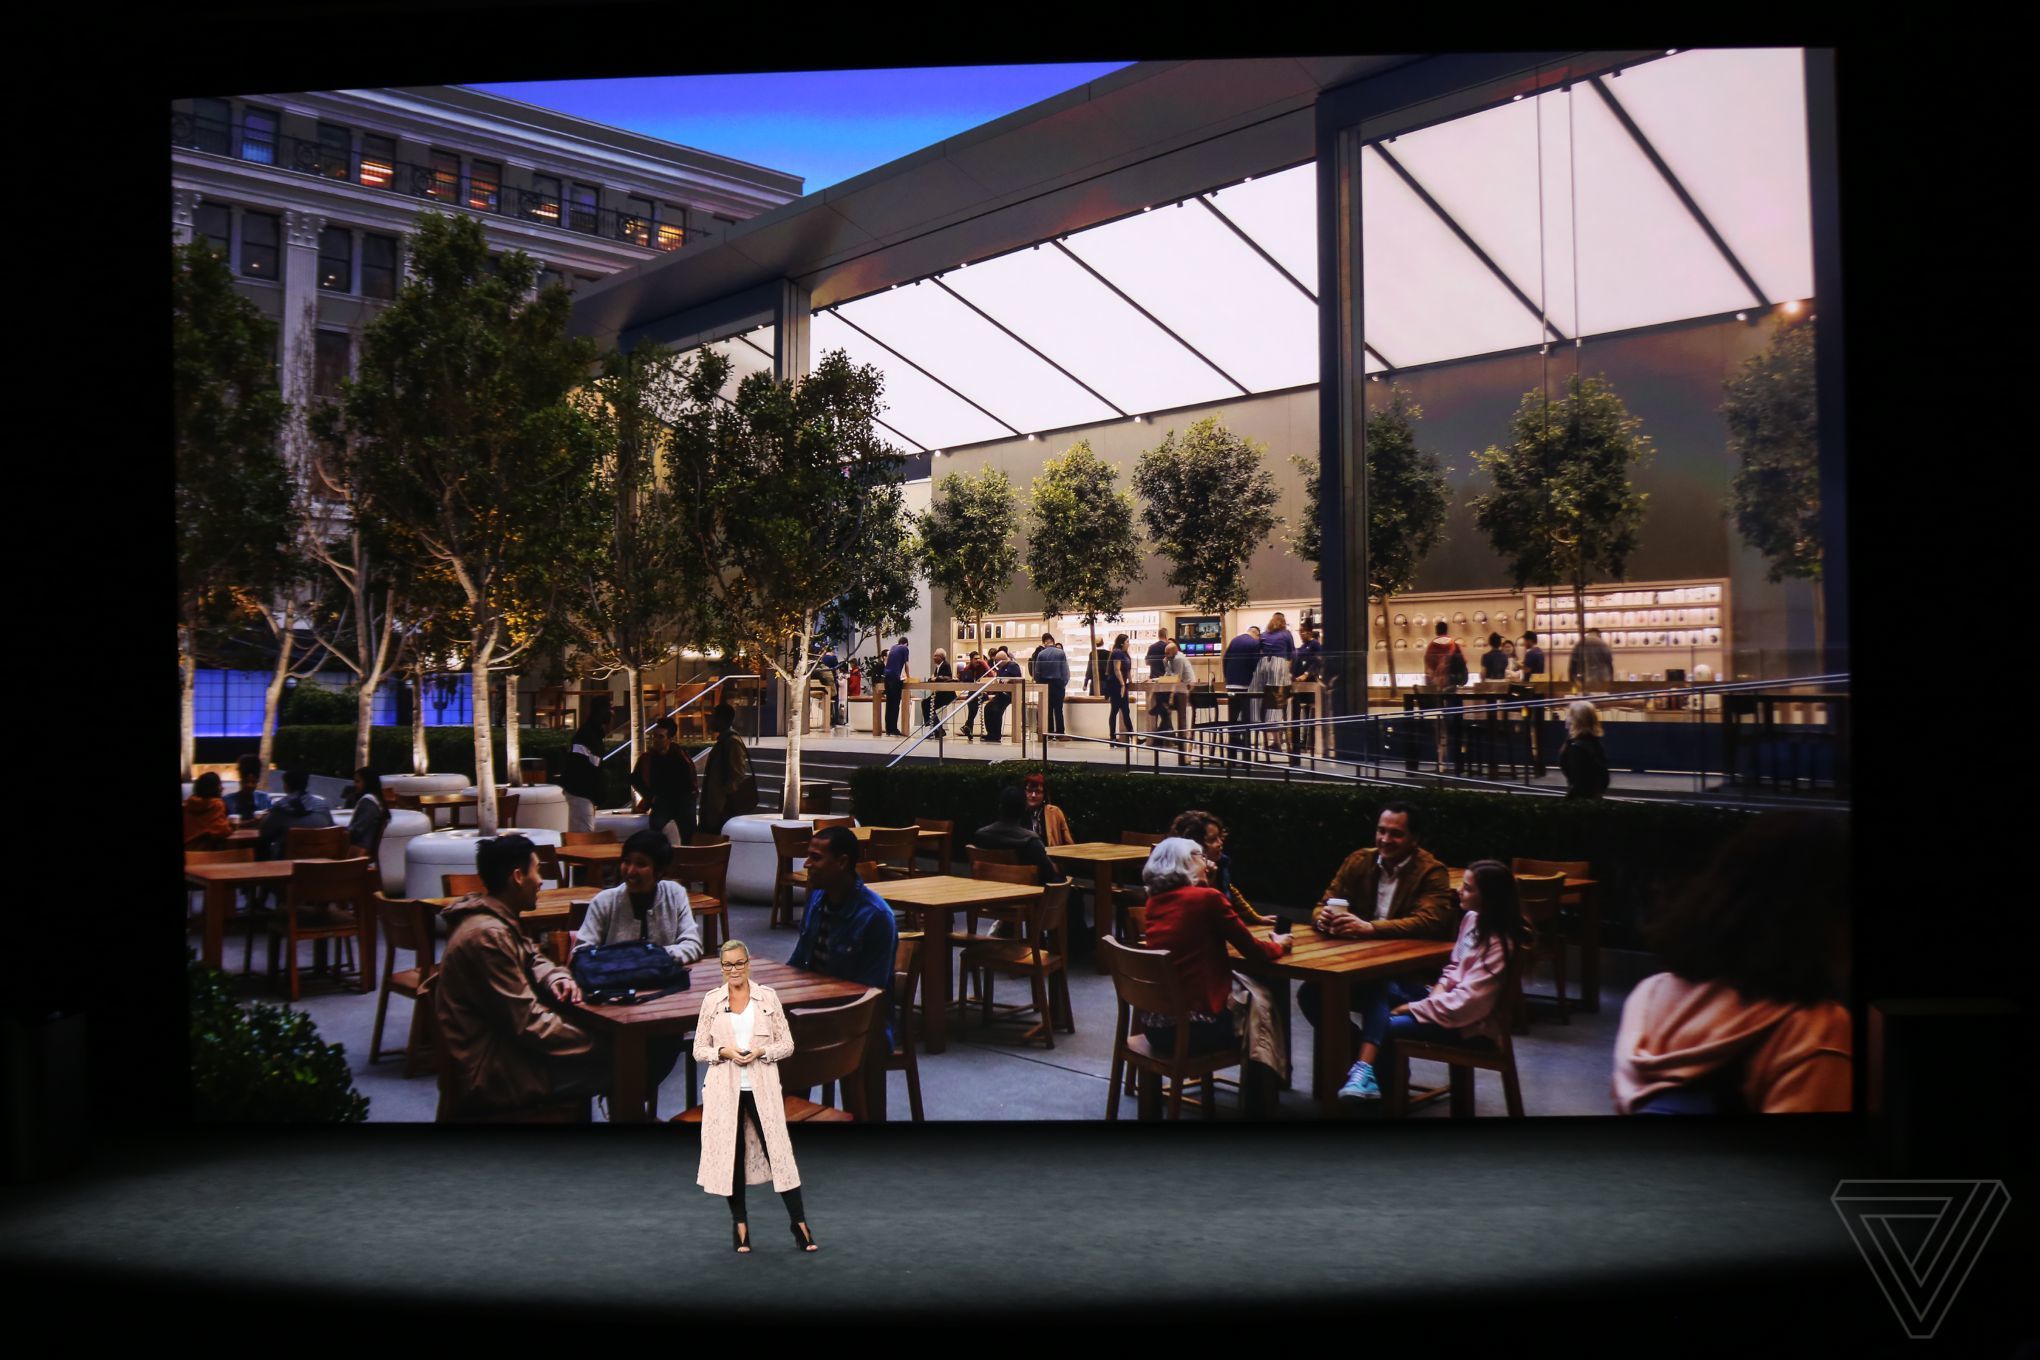 Apple touts new 'Town Square' retail store concept